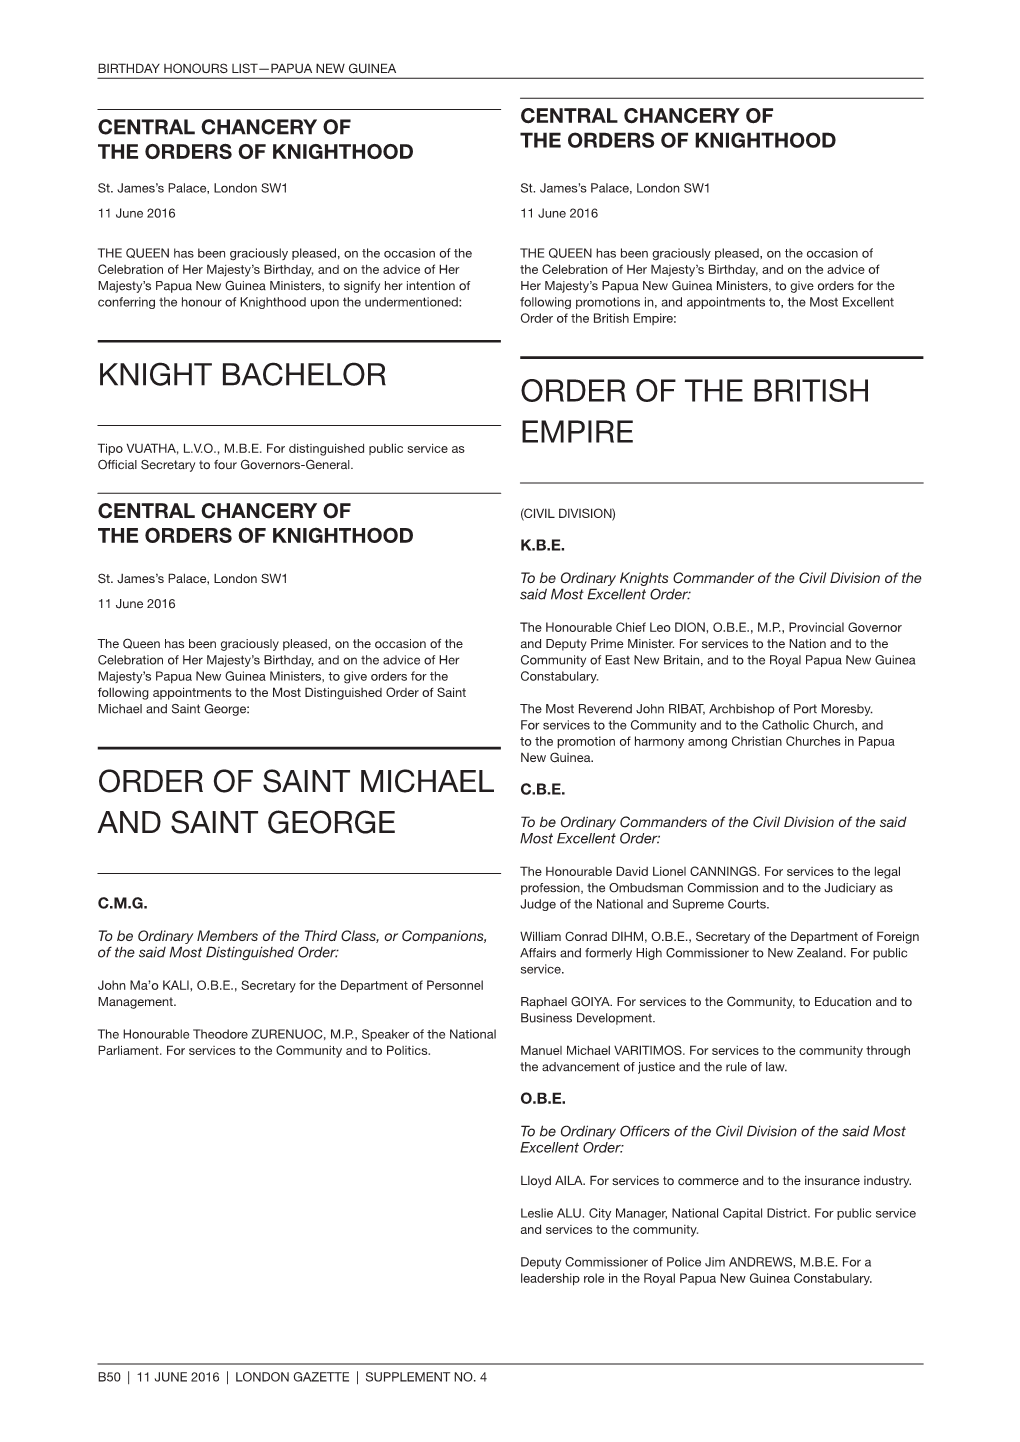 Knight Bachelor Order of Saint Michael and Saint